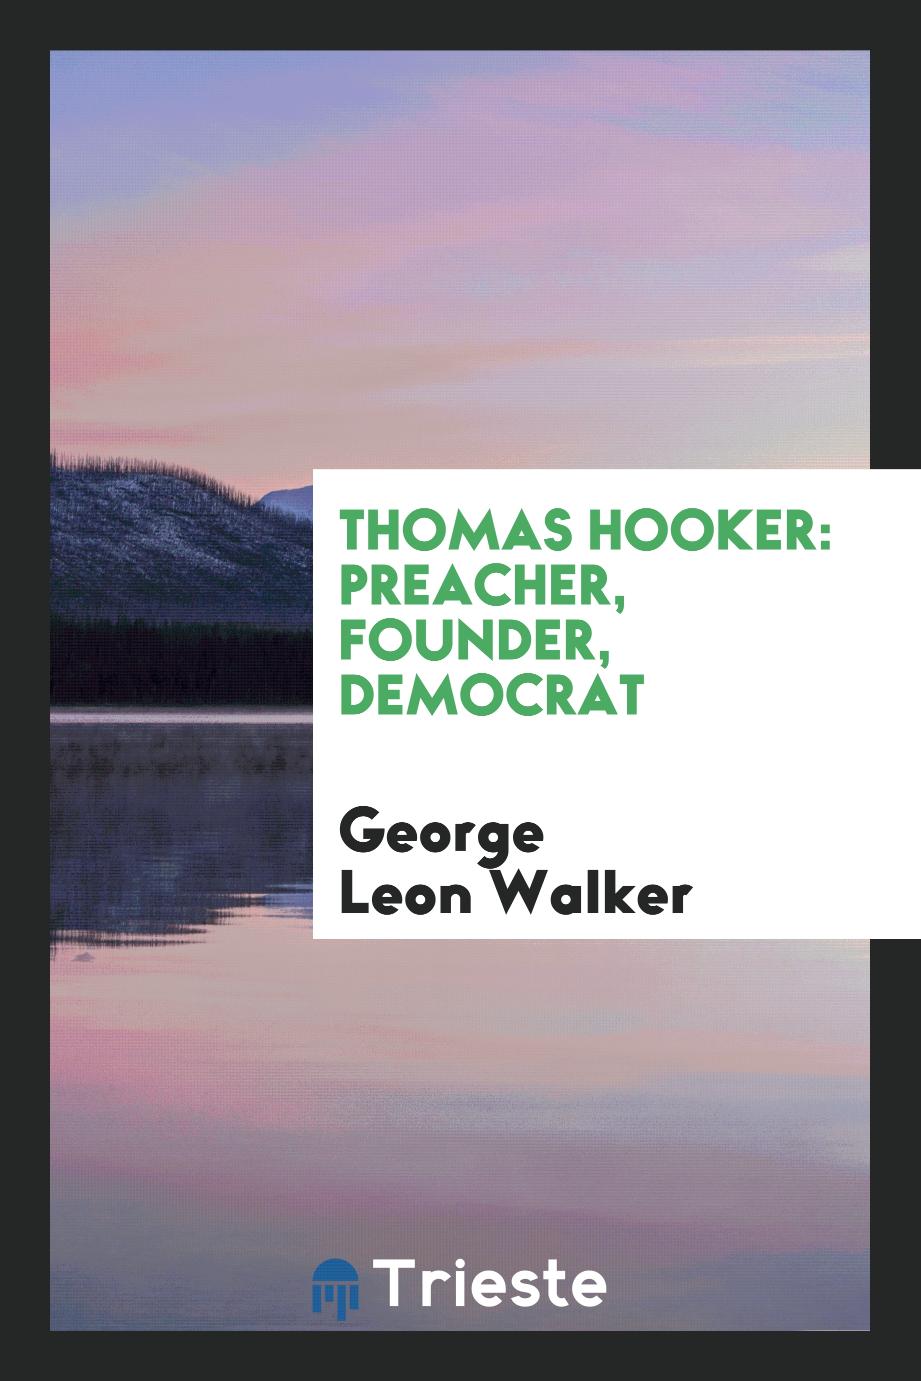 Thomas Hooker: preacher, founder, democrat